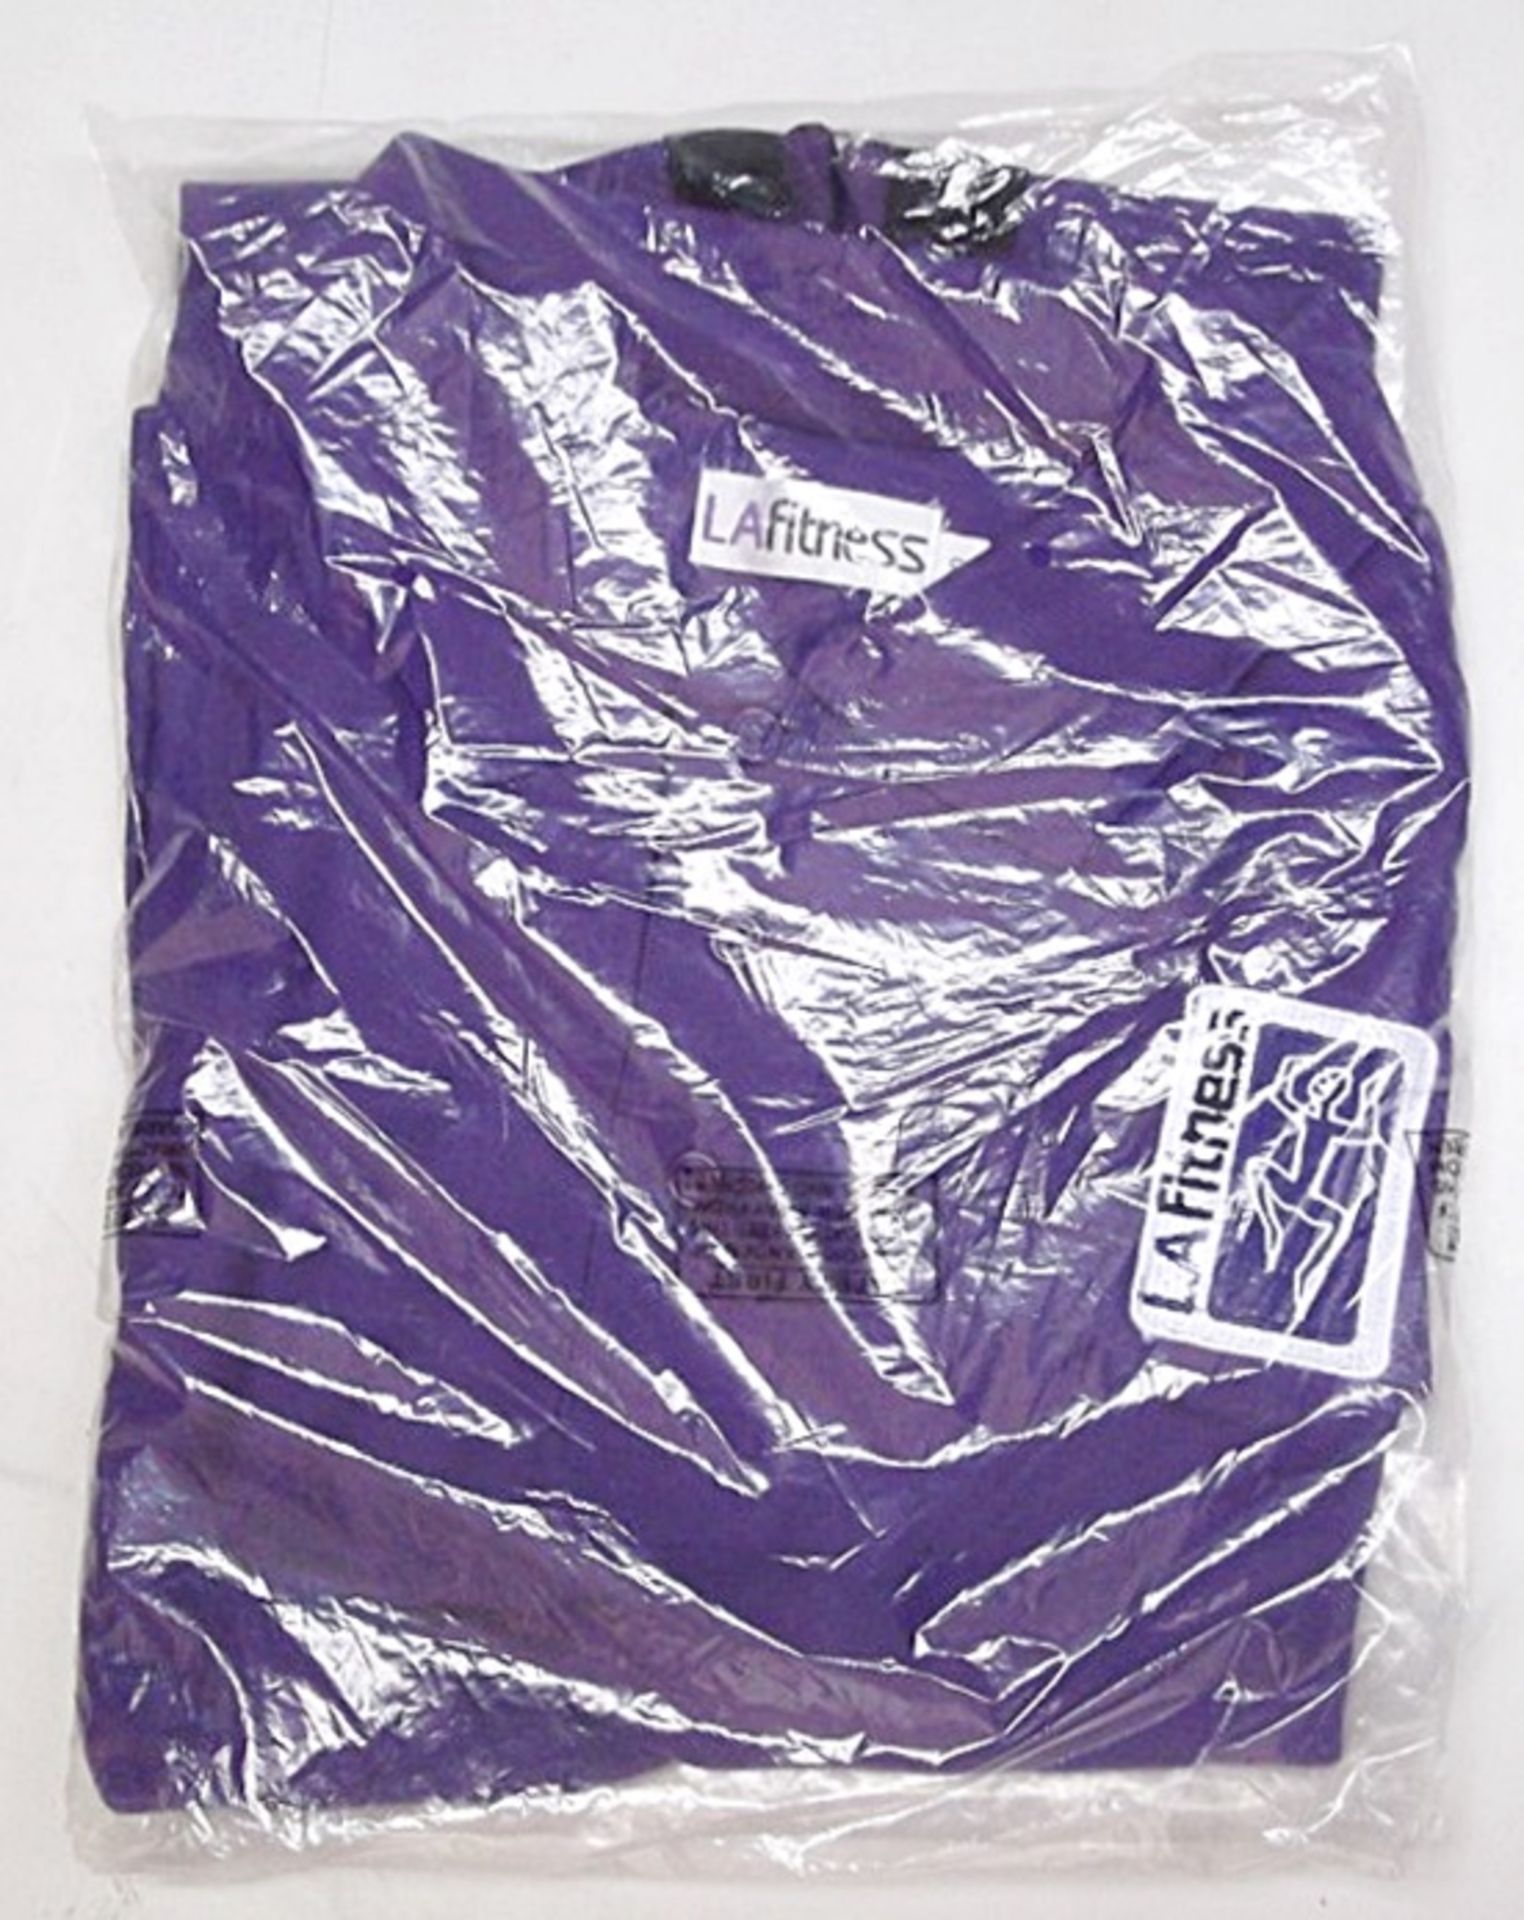 55 x LA Fitness Branded Ladies POLO Shirts - Size: Large - Colour: Purple - CL155 - Ref: JIM153 - - Image 4 of 6